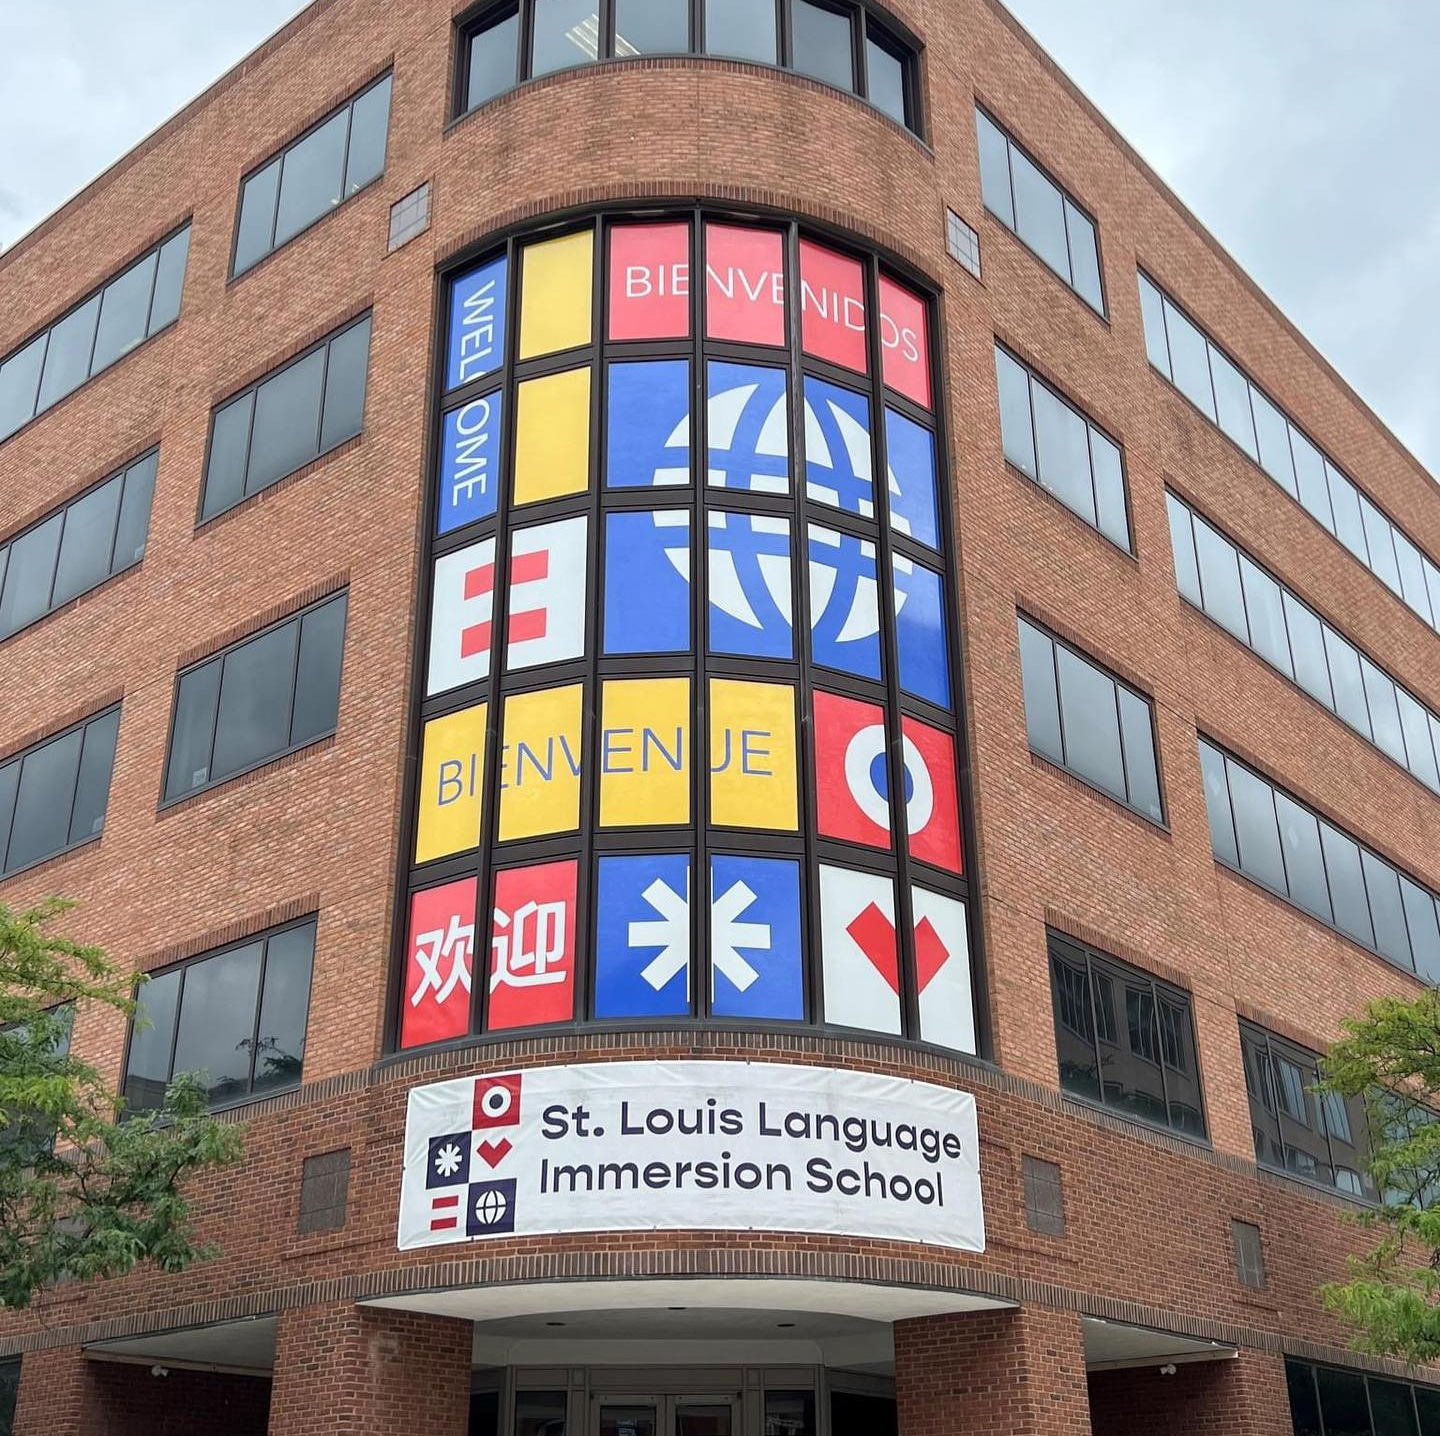 St. Louis Language Immersion School outside front